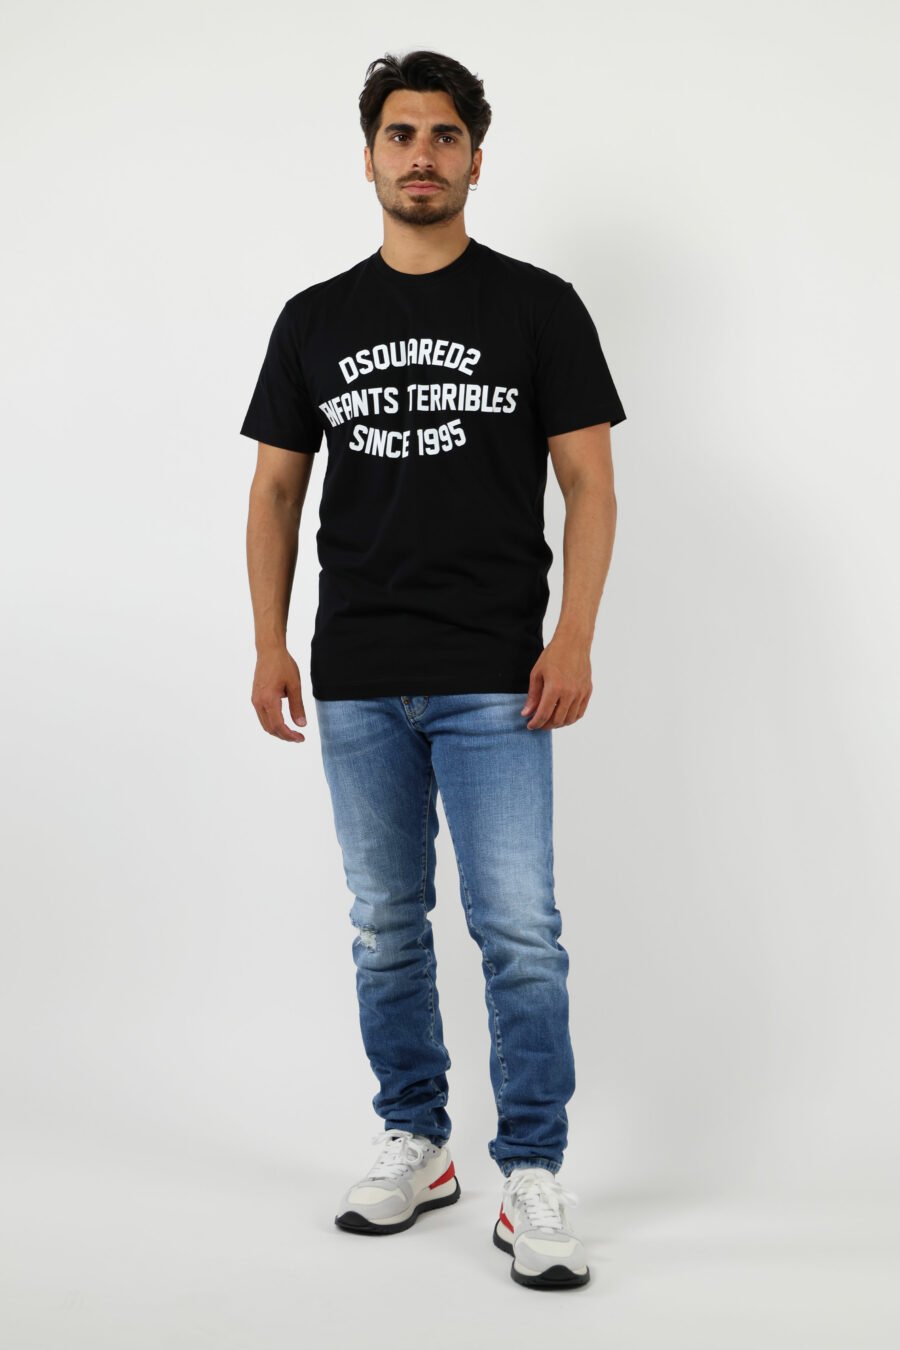 Camiseta negra con maxilogo "enfants terribles since 1995" - 8054148504212 1